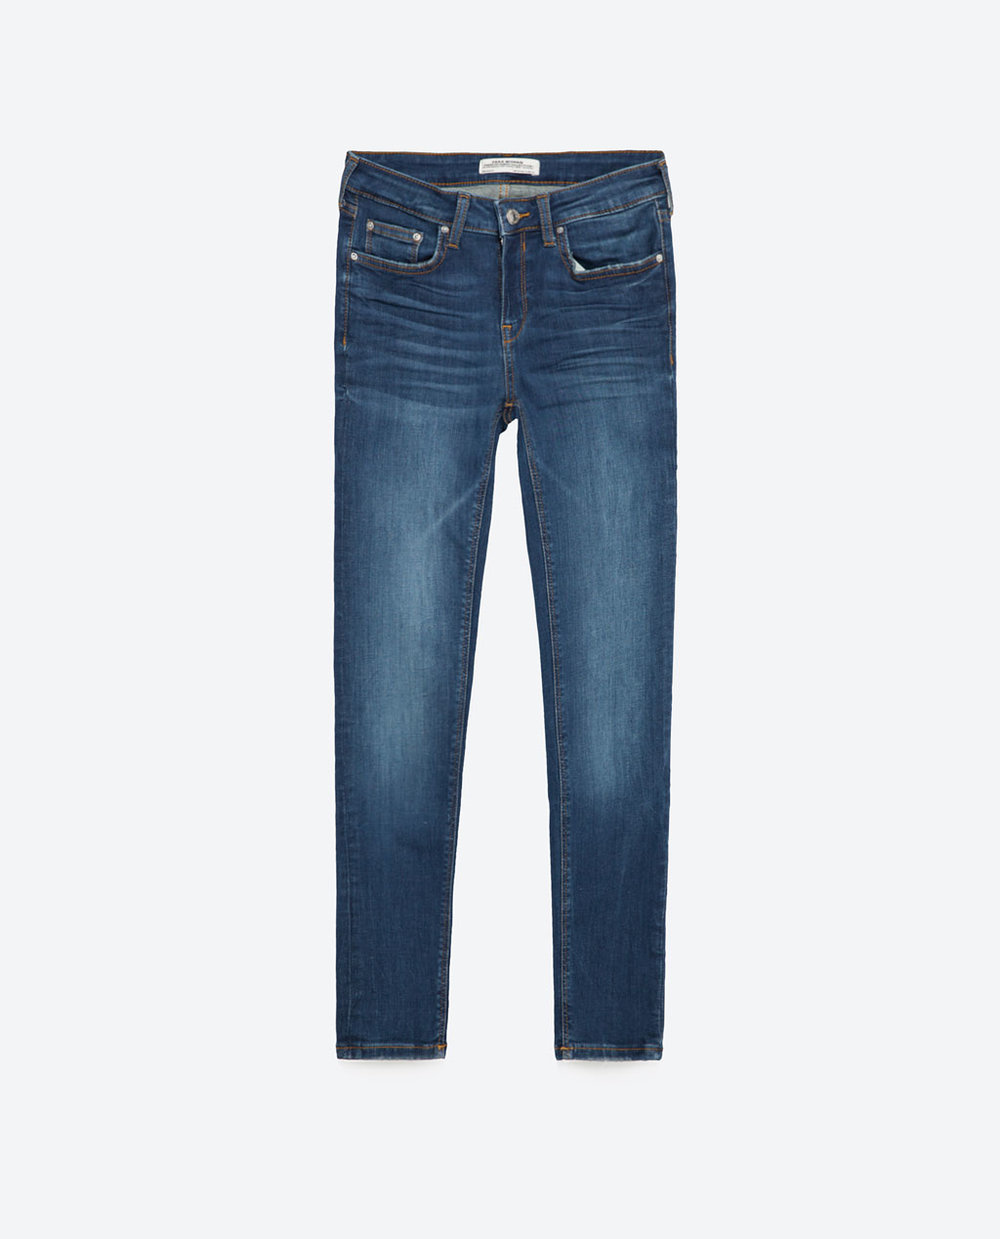 Zara-Mid-rise-skinny-Jeans.jpg